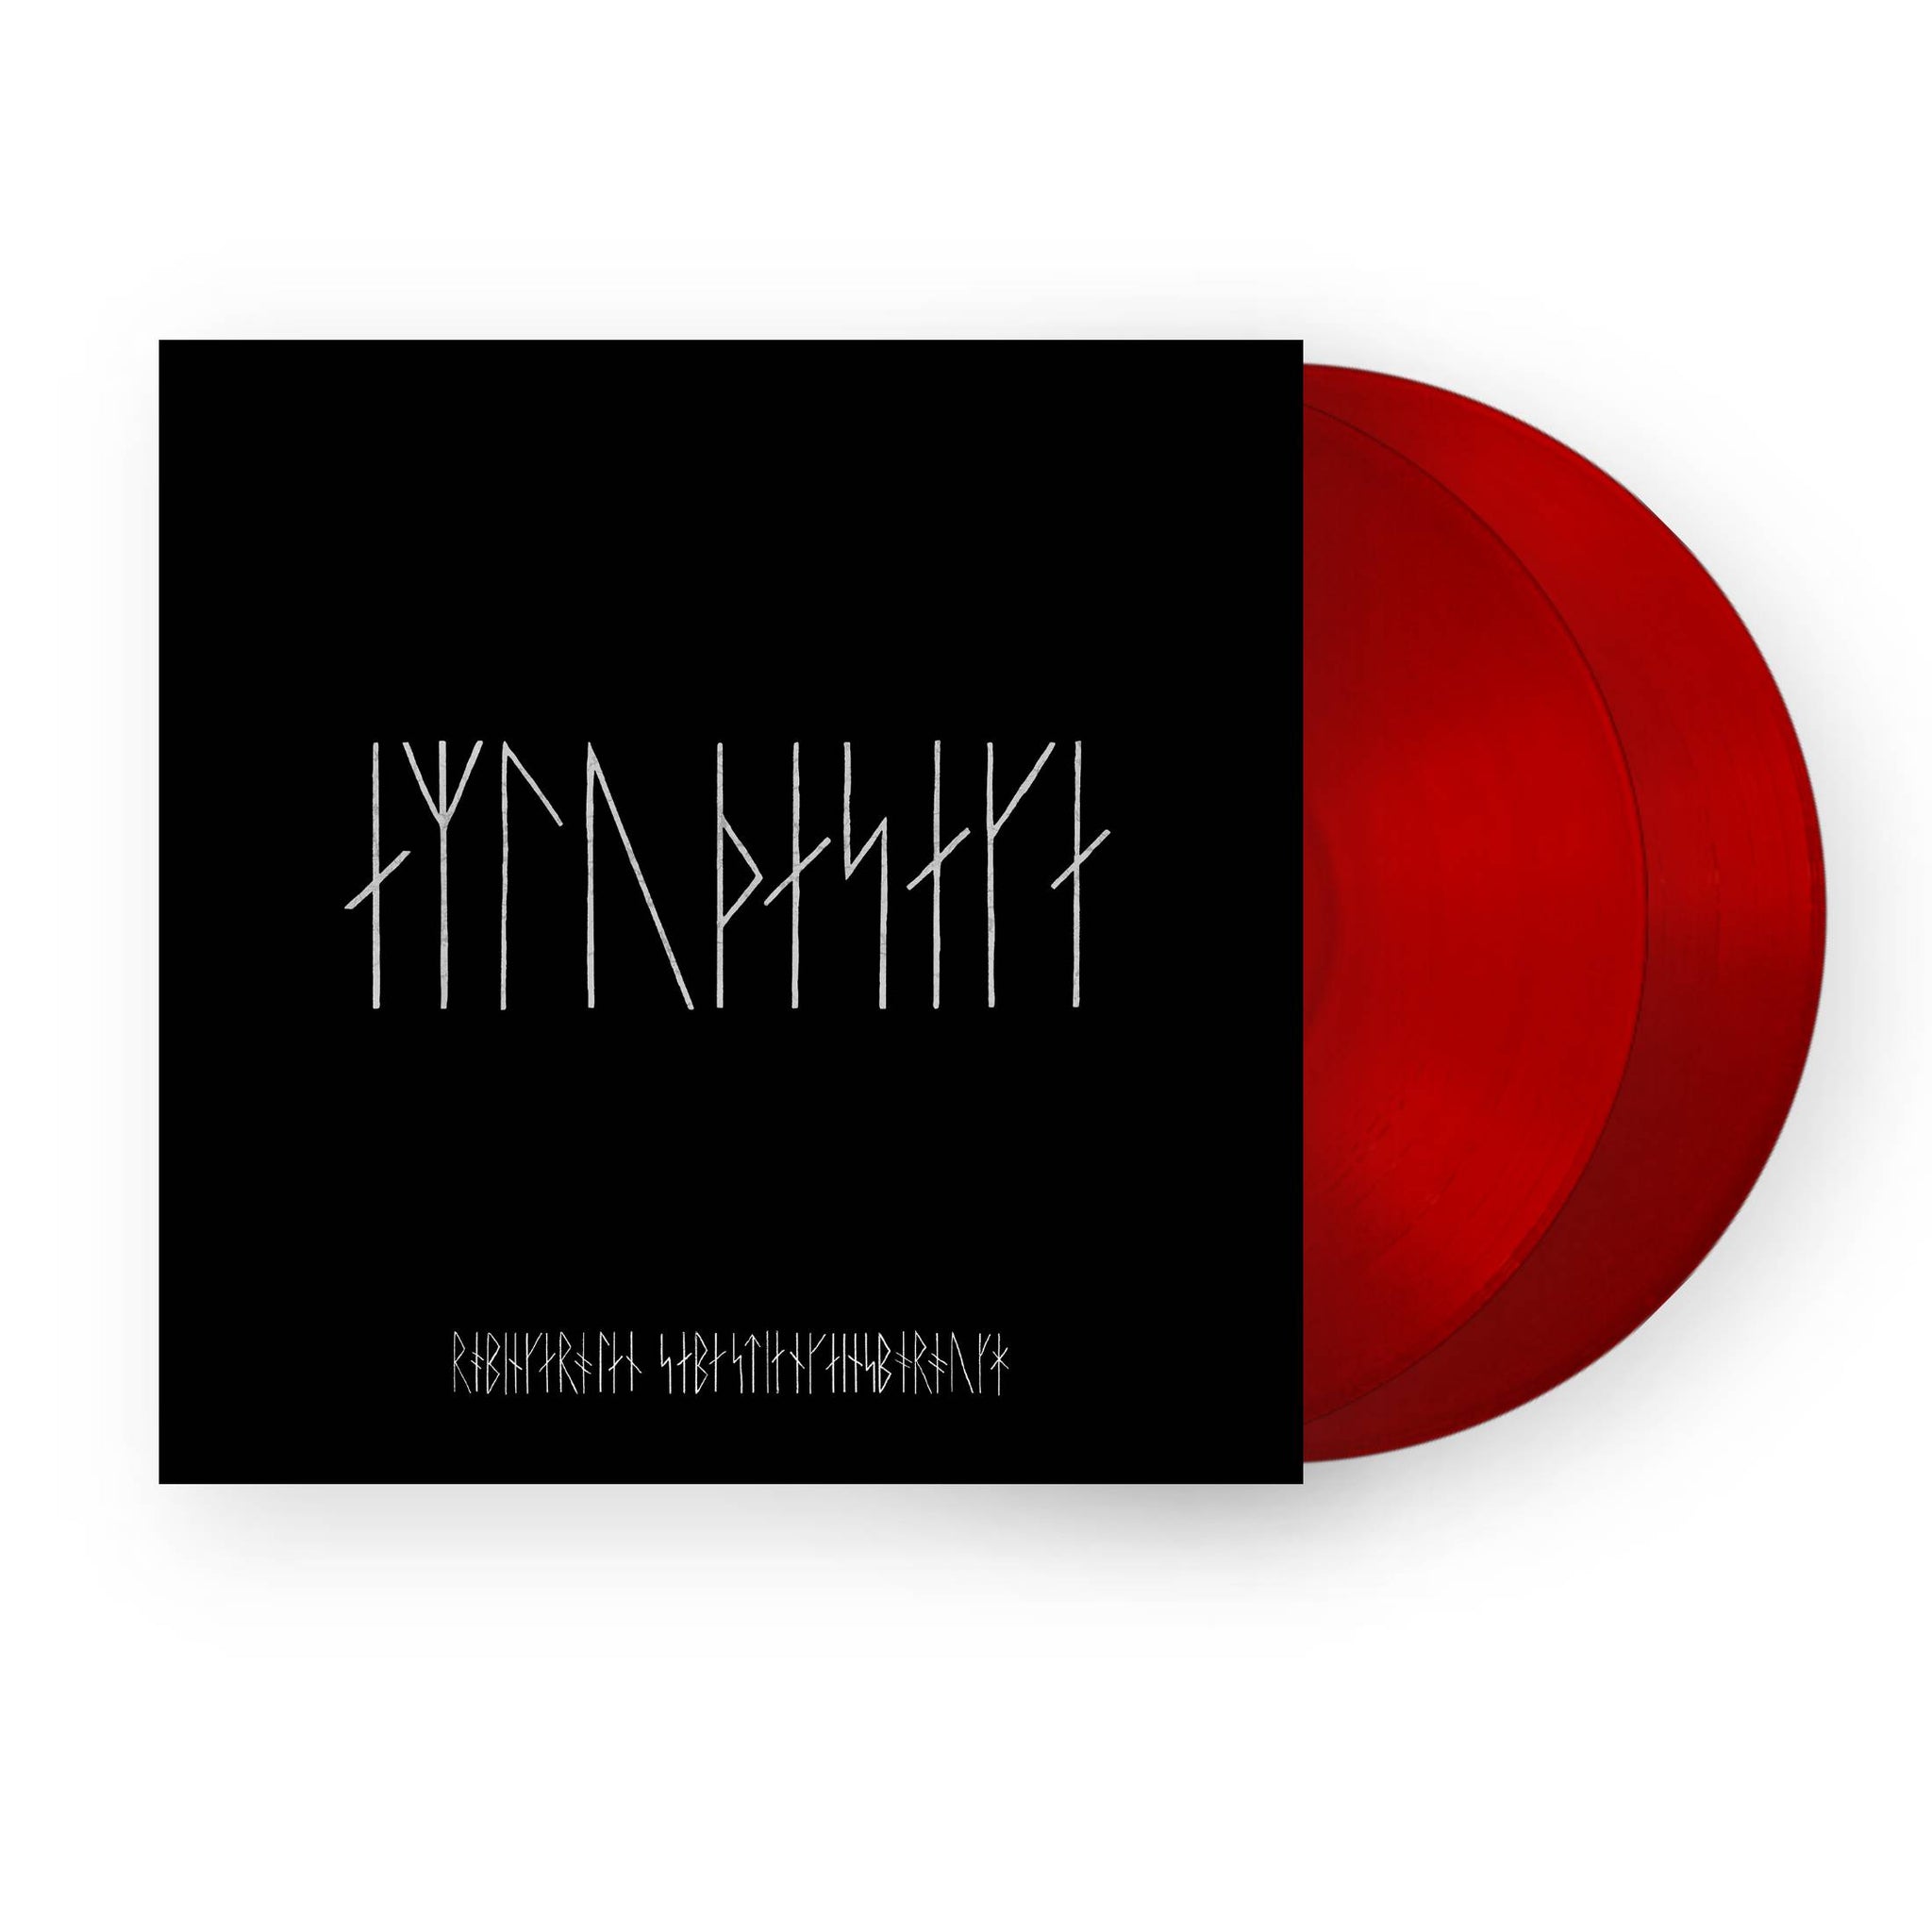 The Northman (Original Motion Picture Soundtrack) - Robin Carolan  Sebastian Gainsborough 2xLP (Red Vinyl)